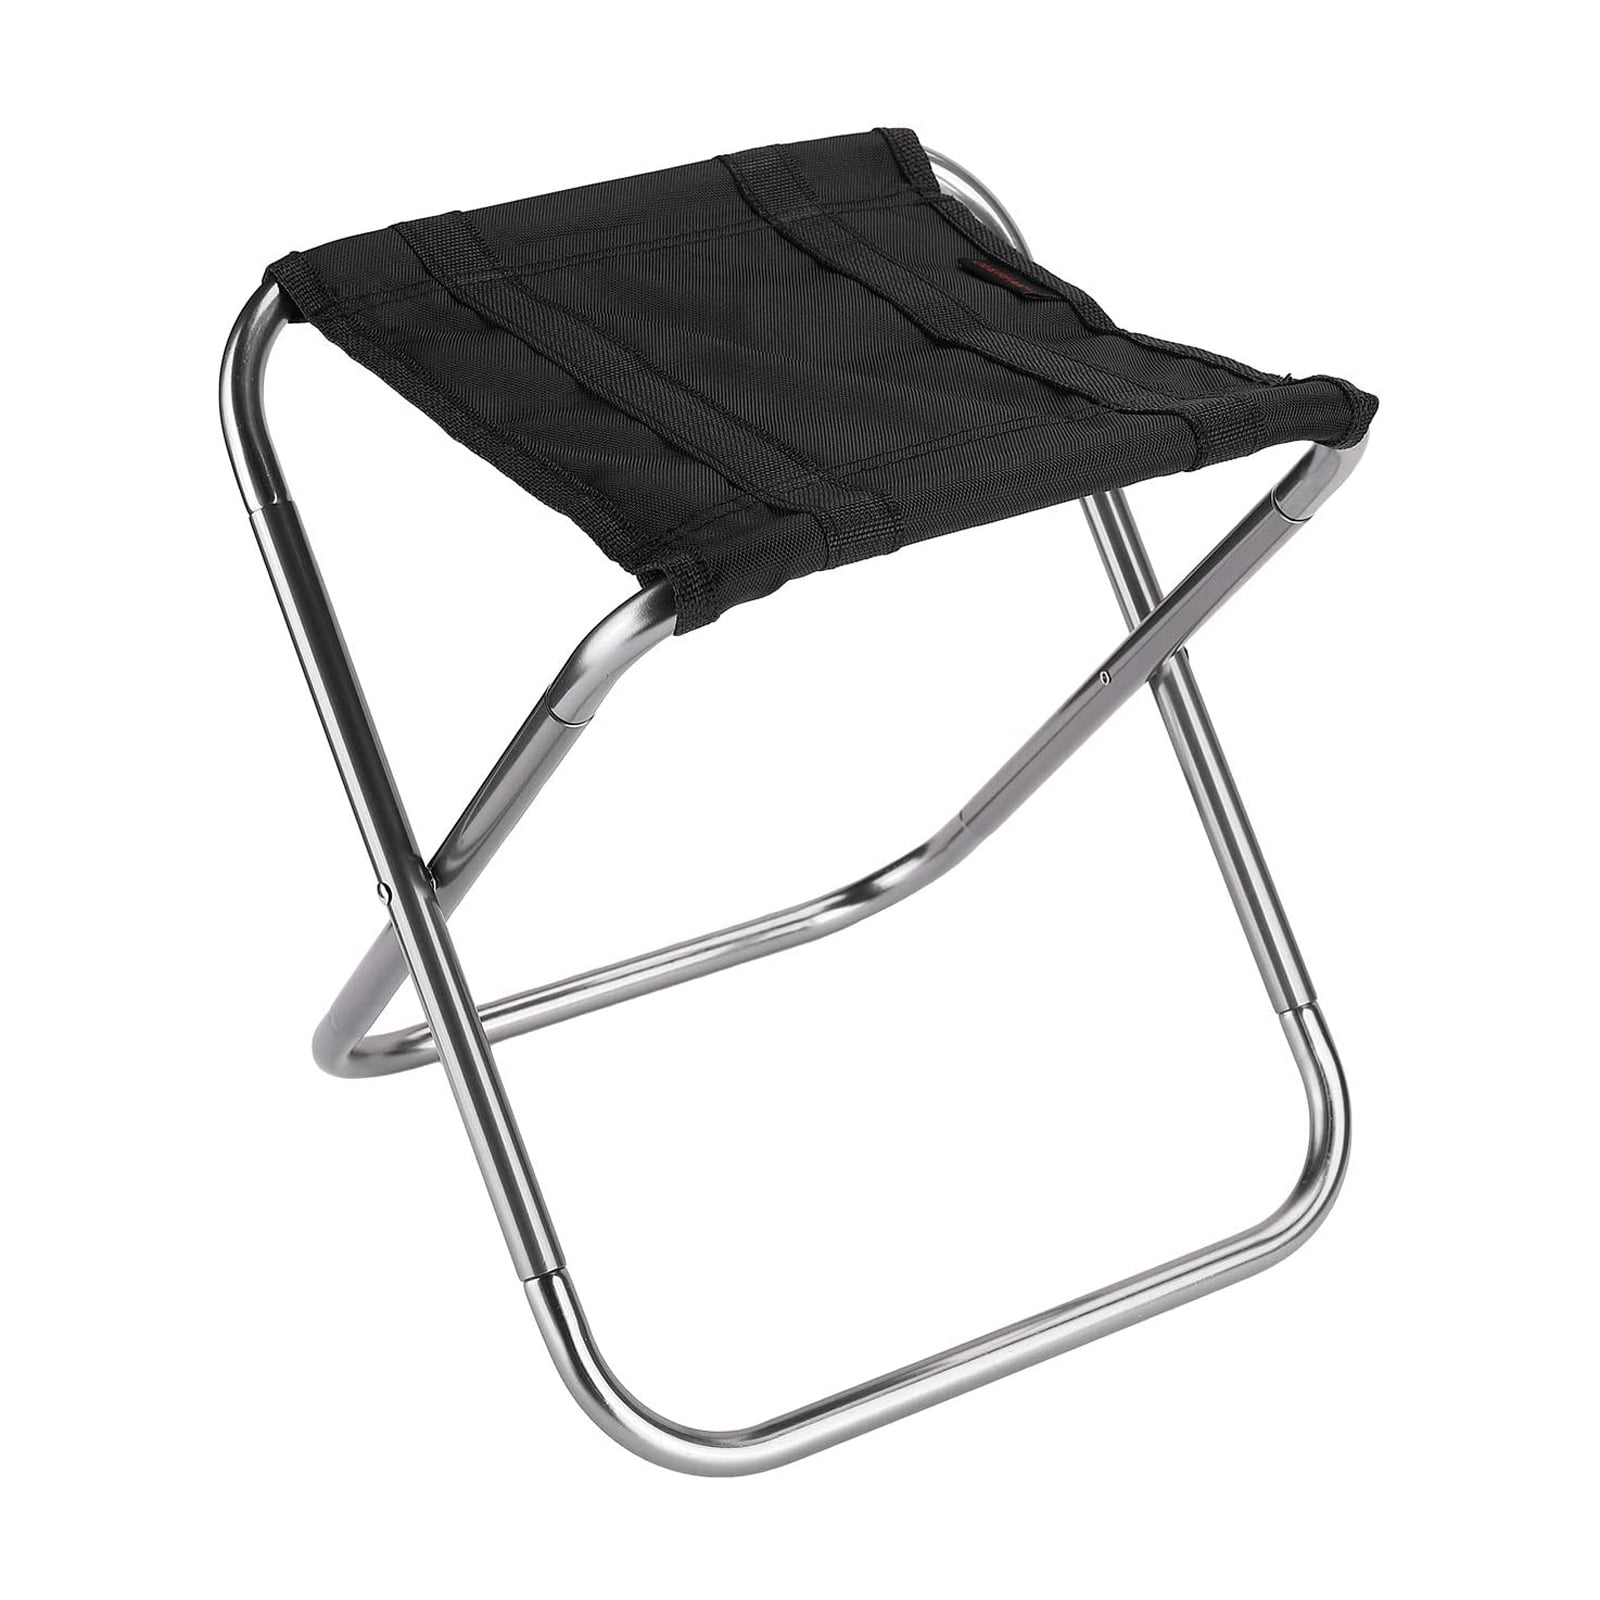 mini portable folding chair outdoor travel fishing camping picnic beach stool ZY 